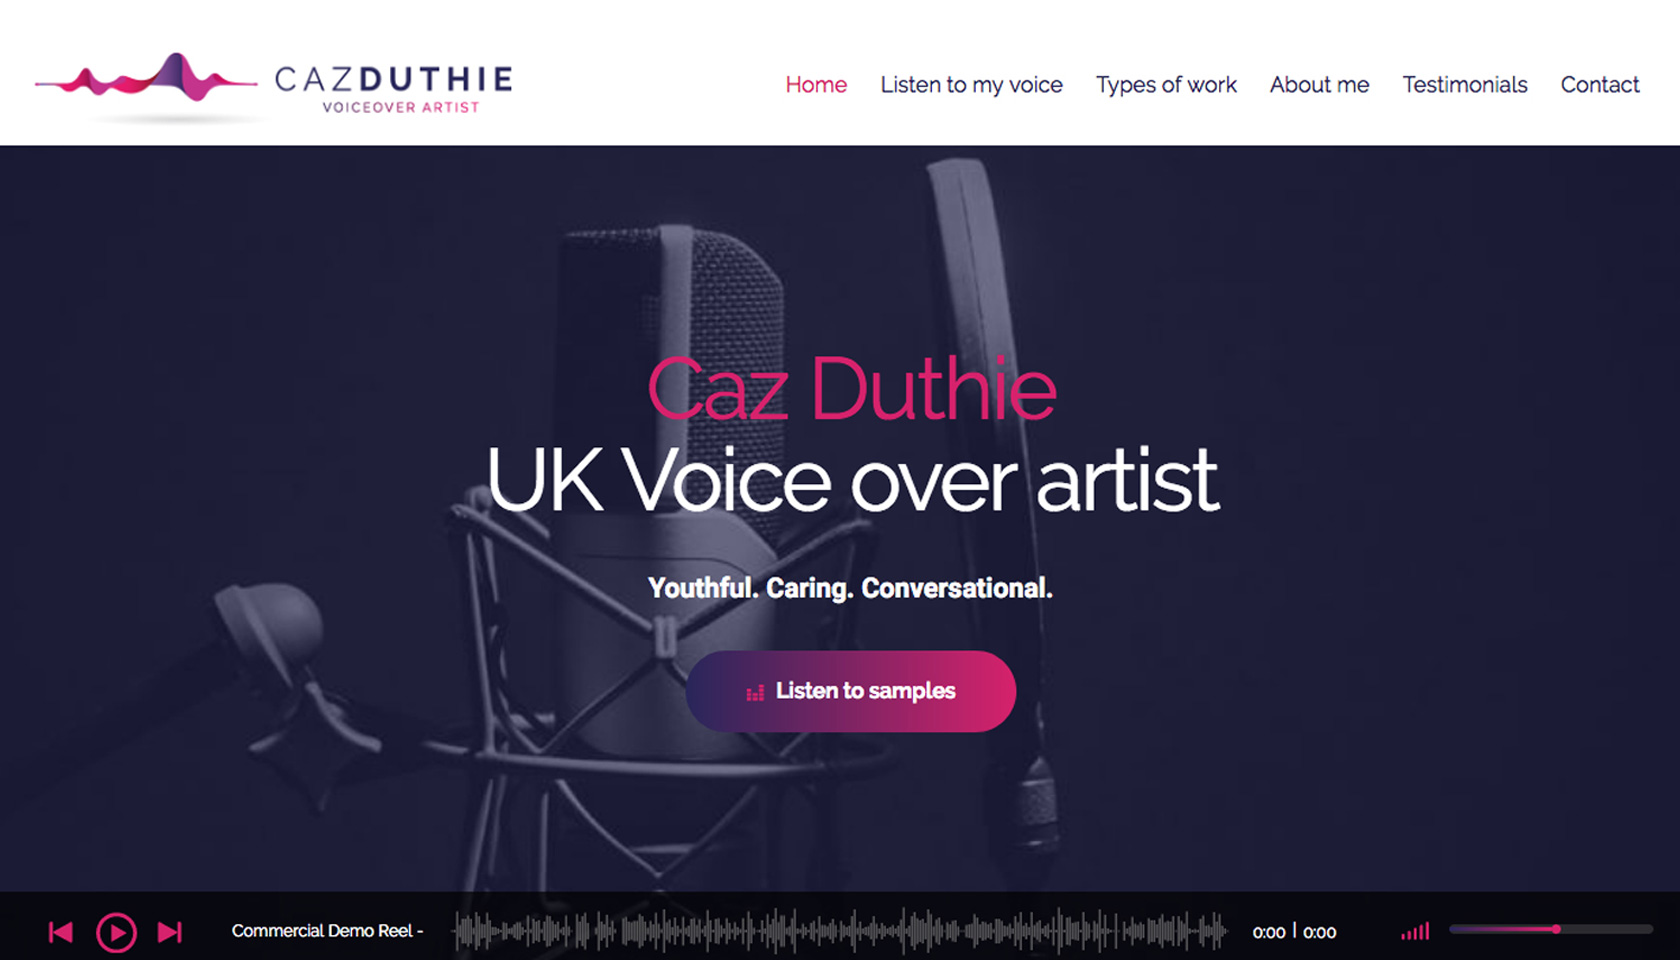 Caz Duthie Branding and Wordpress website - Hijack Creative Agency Southampton